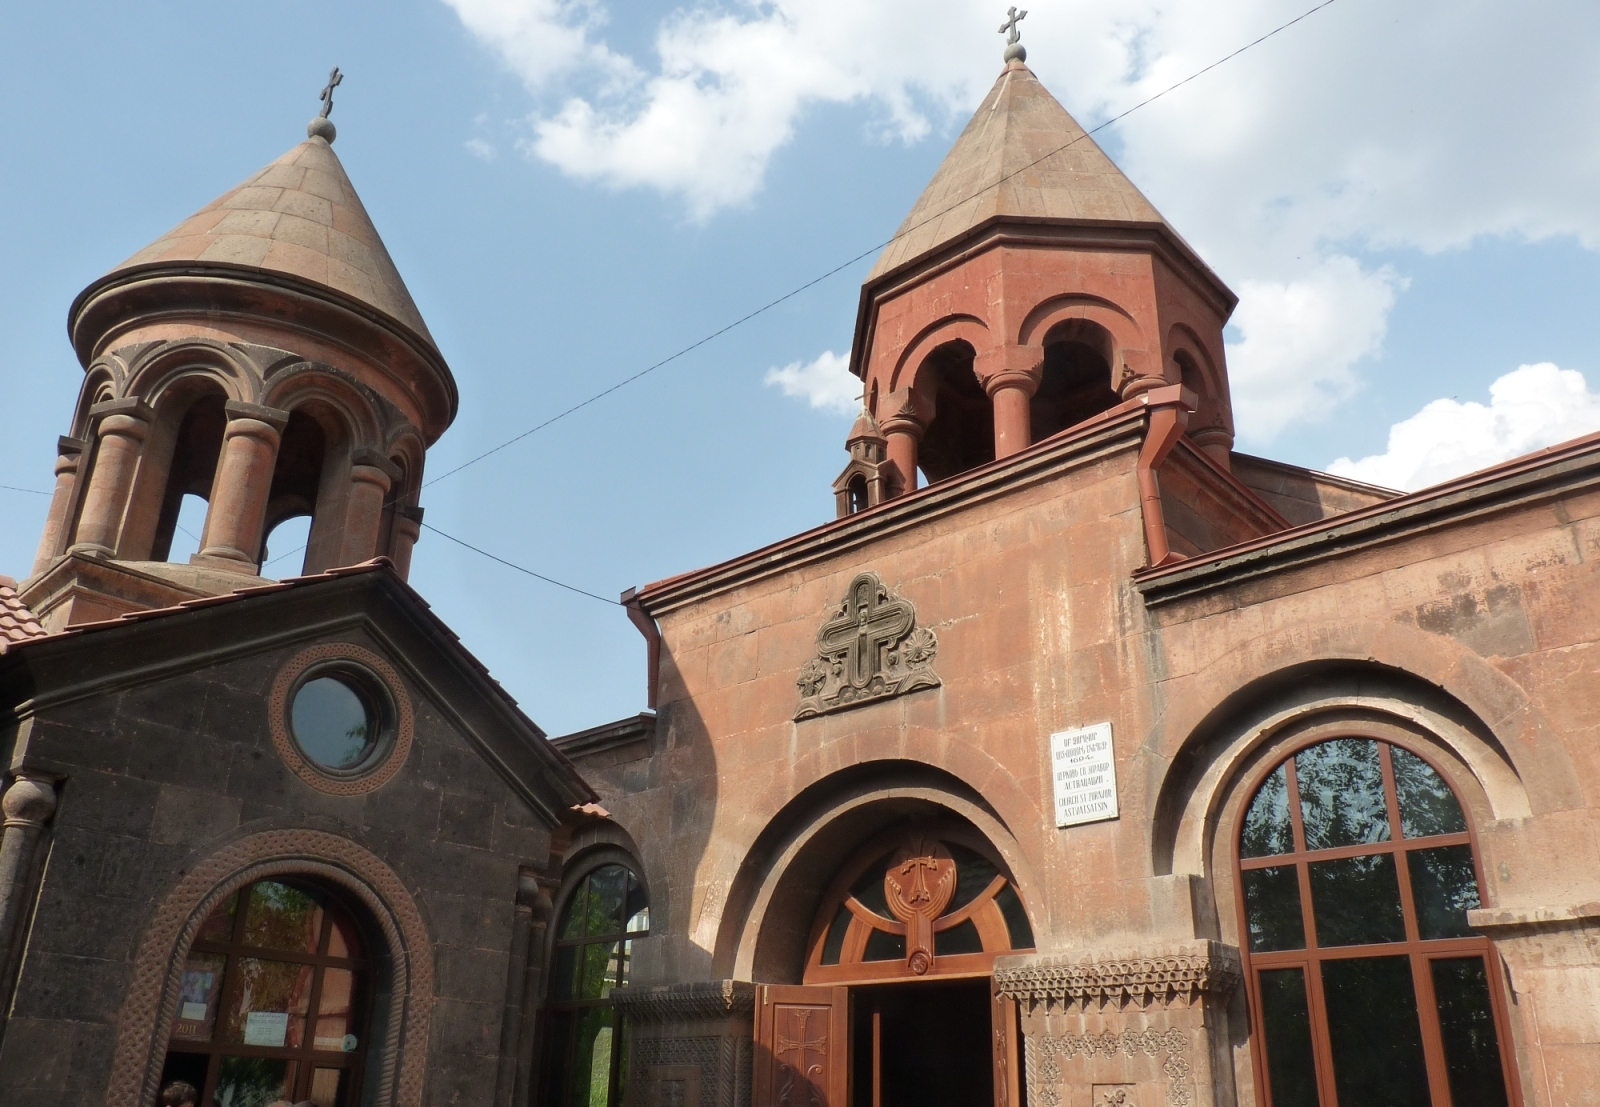 St. Zoravor Church